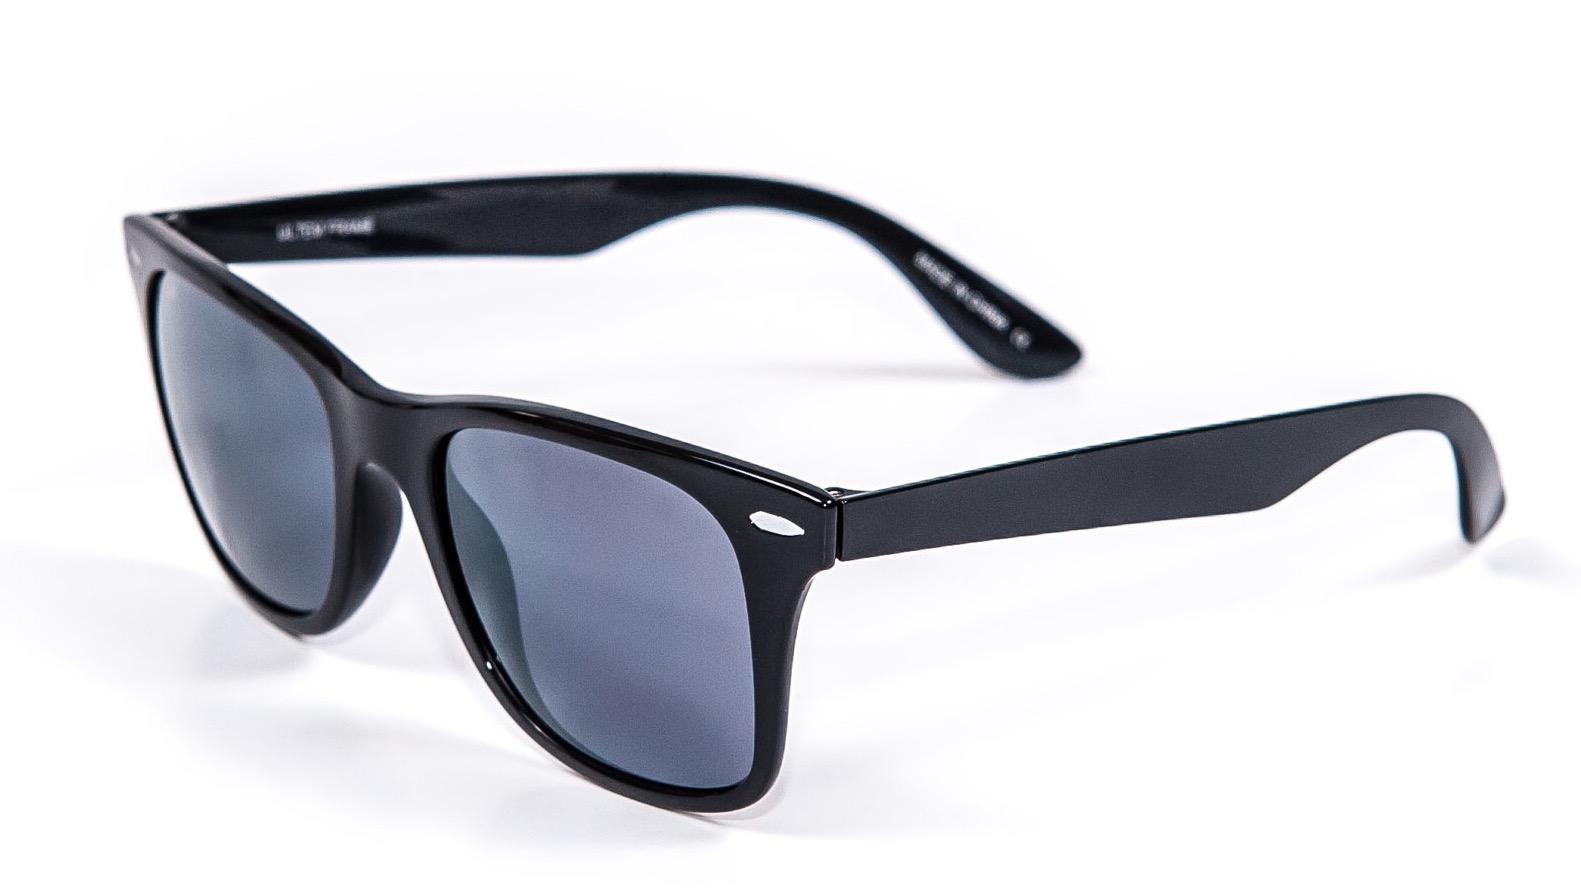 Best Polarized Sunglasses, JiMarti Polarized Sunglasses